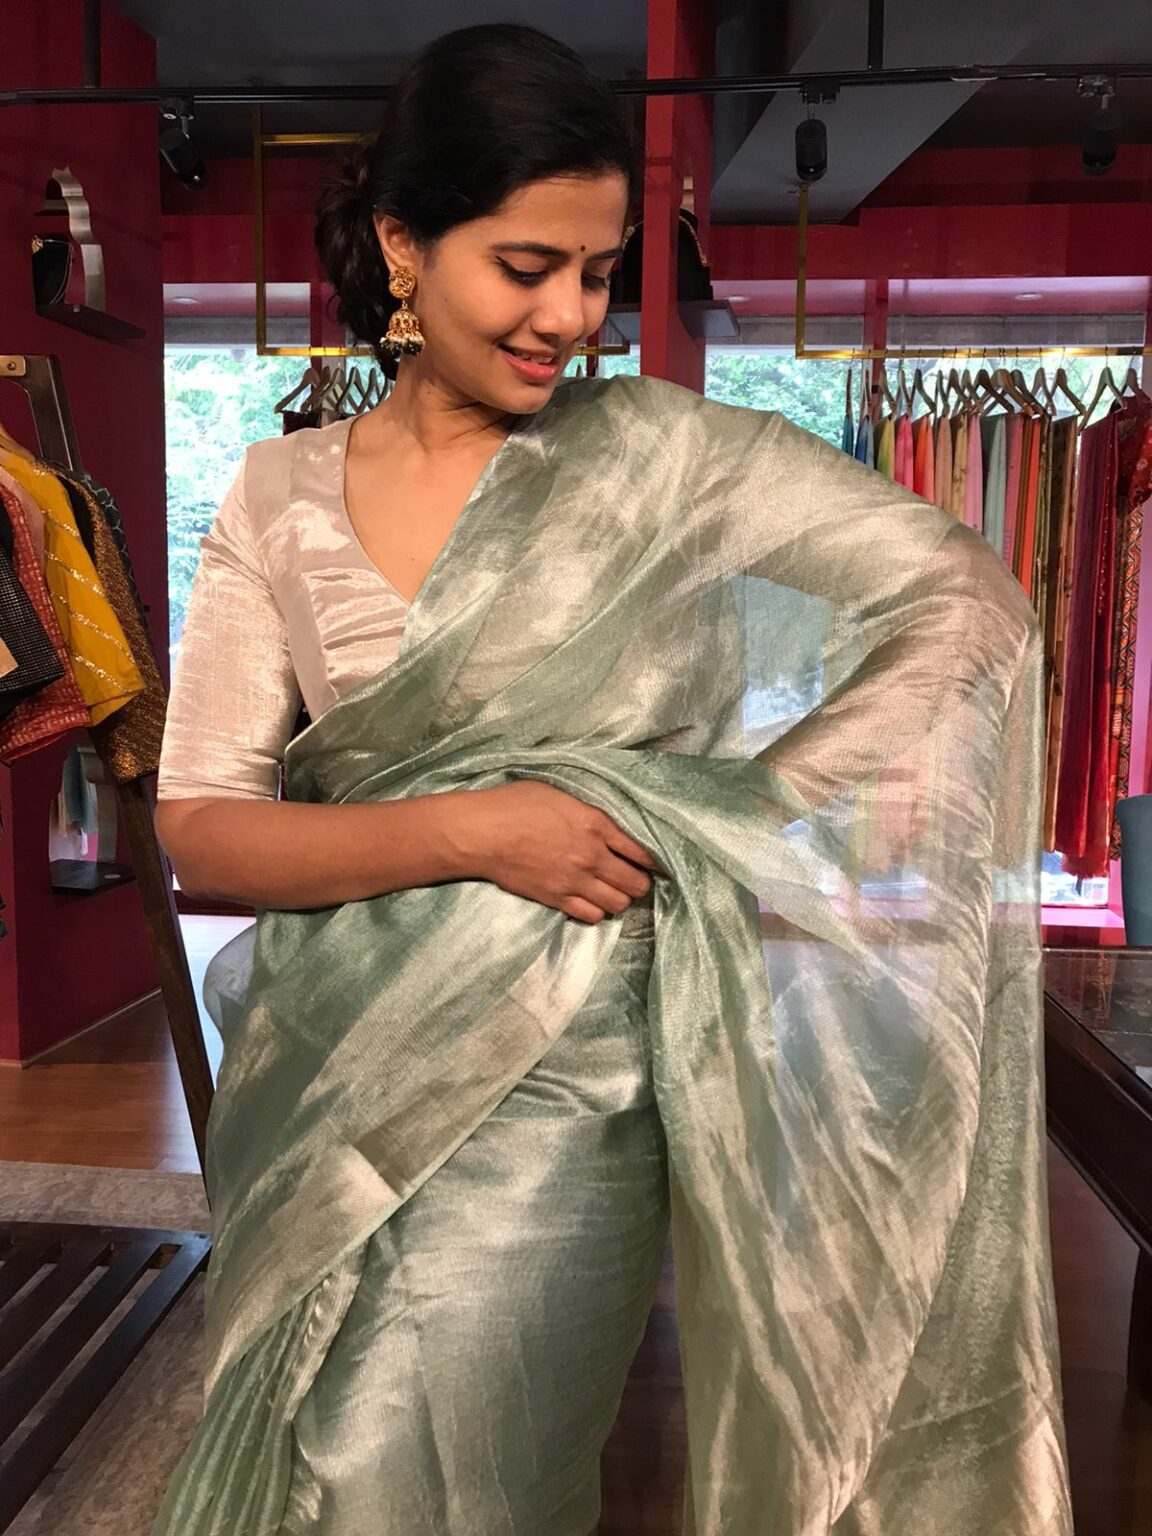 Tissue Silk Saree | Buy Tissue Sarees Online at Lowest Prices